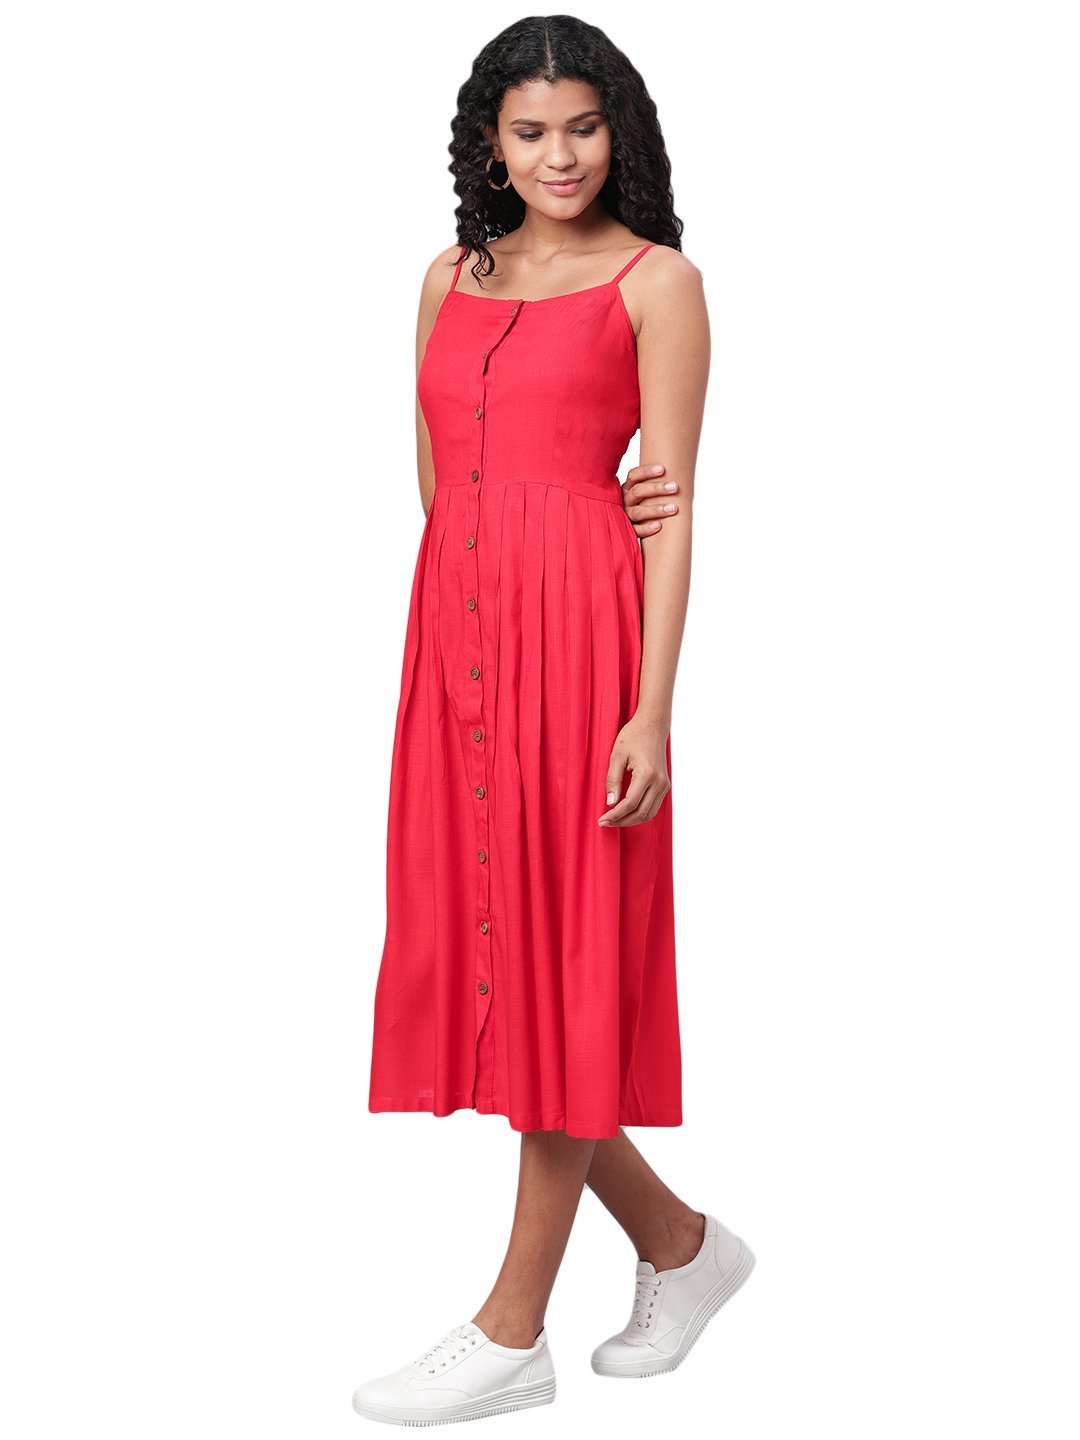 Women's Red Printed Sleeveless Cotton Slub Streps Neck Casual Dress - Myshka